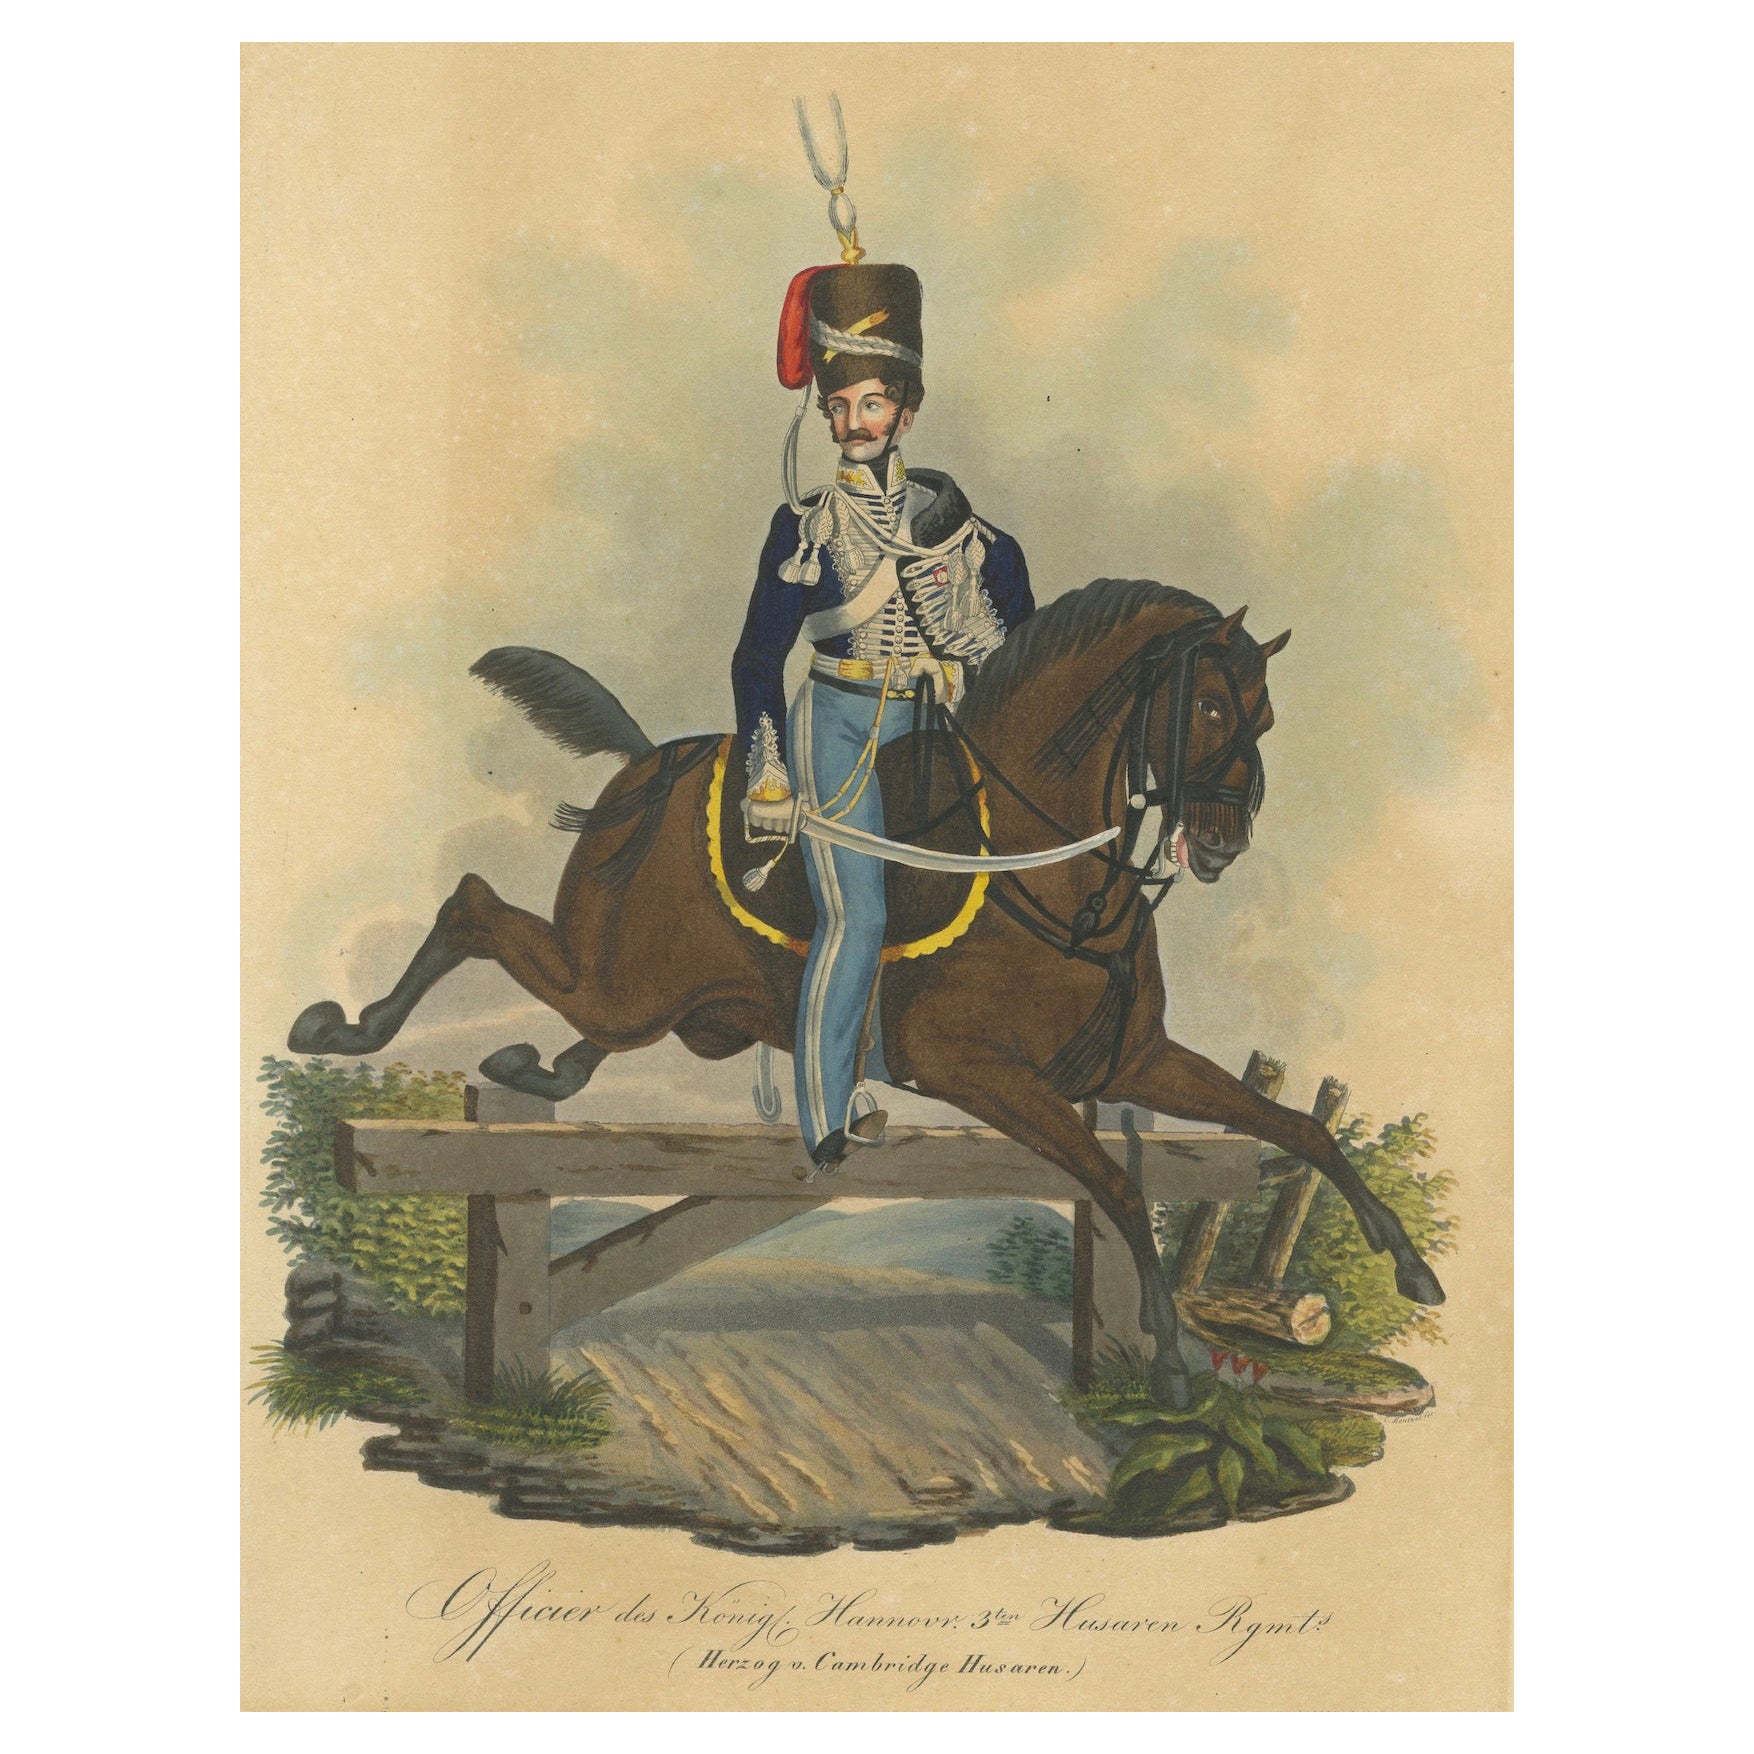 Officer of the King's German Legion (Duke of Cambridge's Hussars), circa 1828